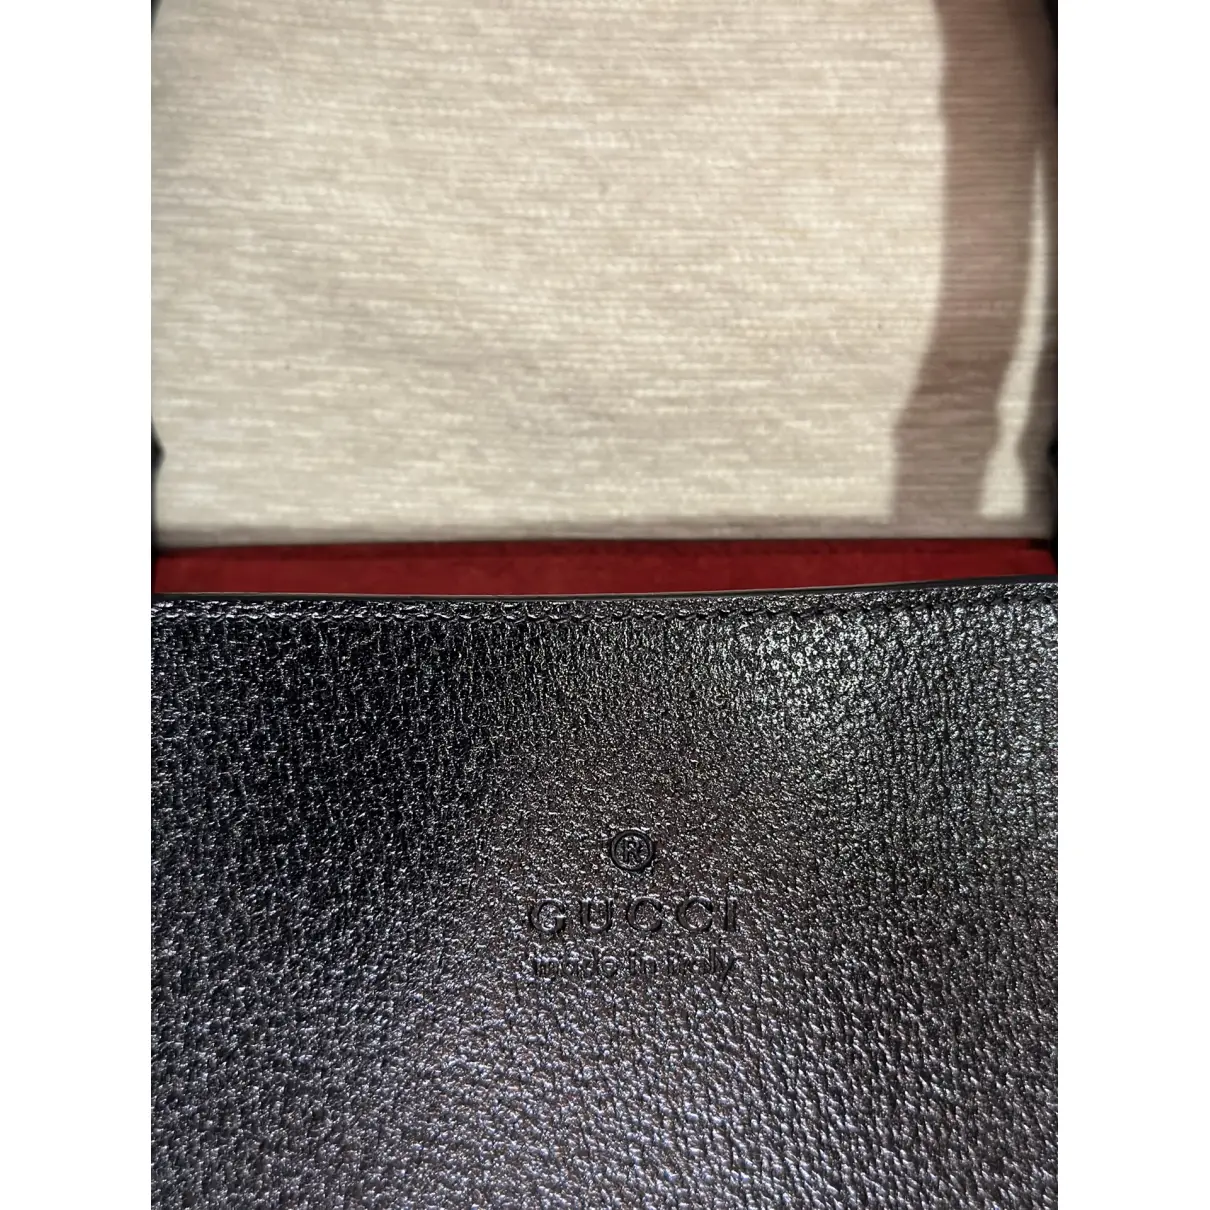 Bamboo Top Handle leather handbag Gucci